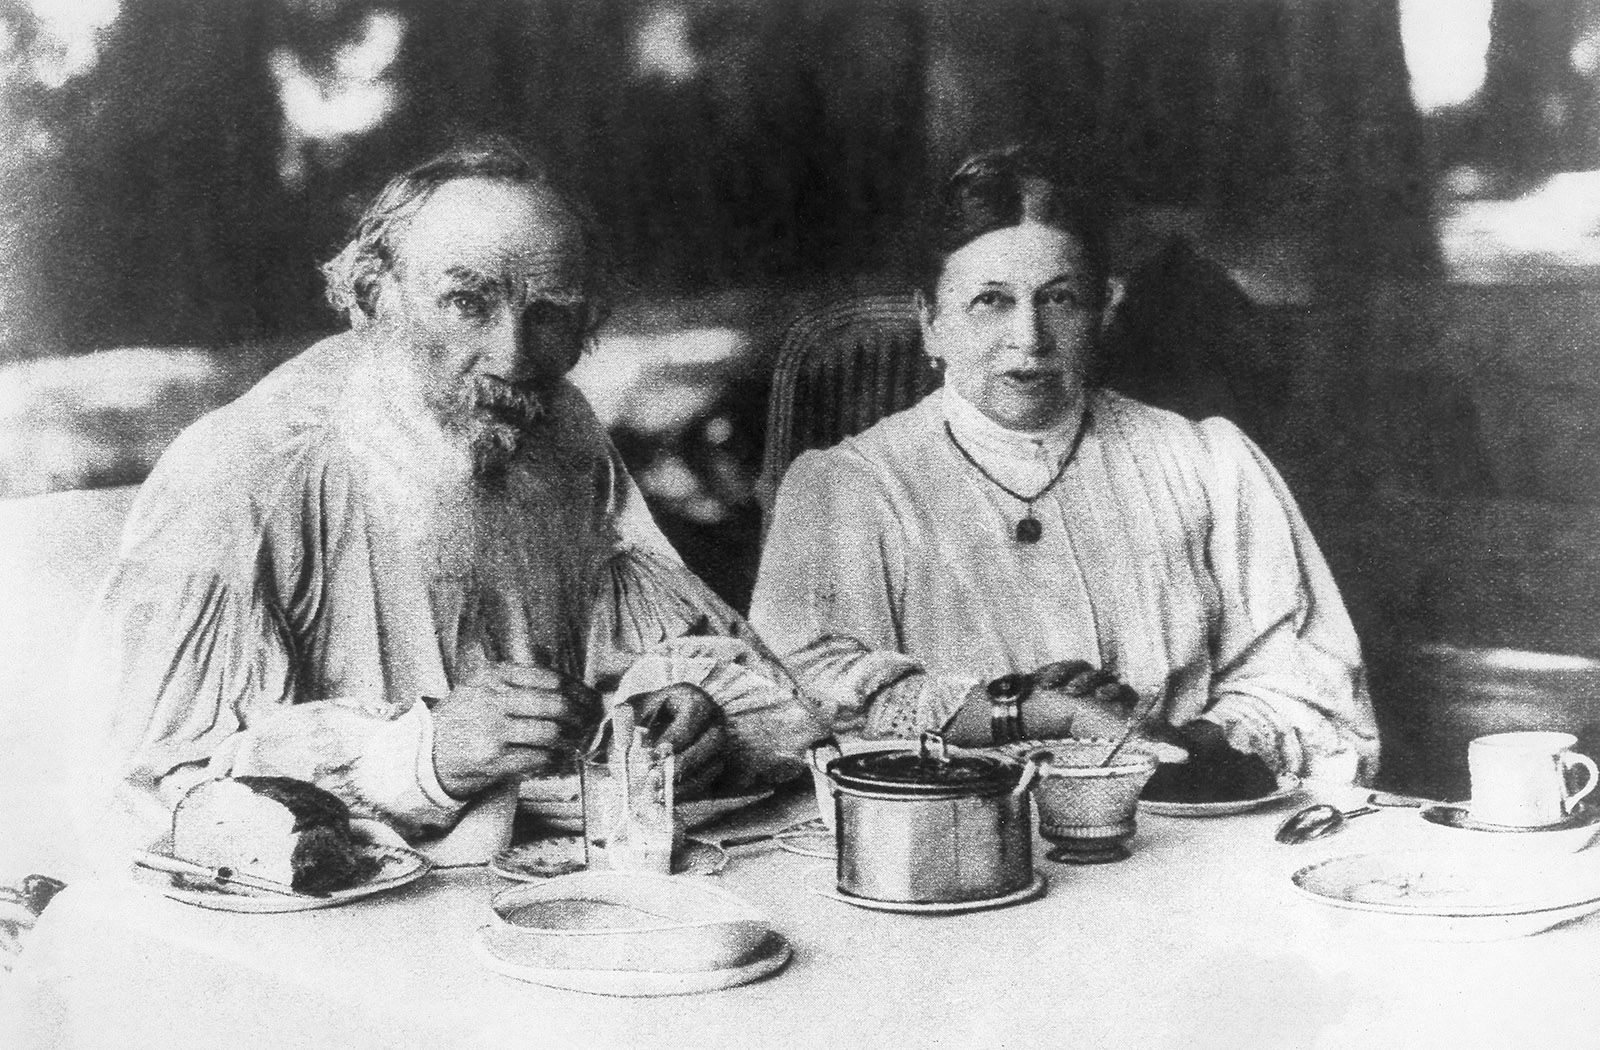 Leo Tolstoy with his wife, Sophia (Sonya), in the garden at Yasnaya Polyana, circa 1890